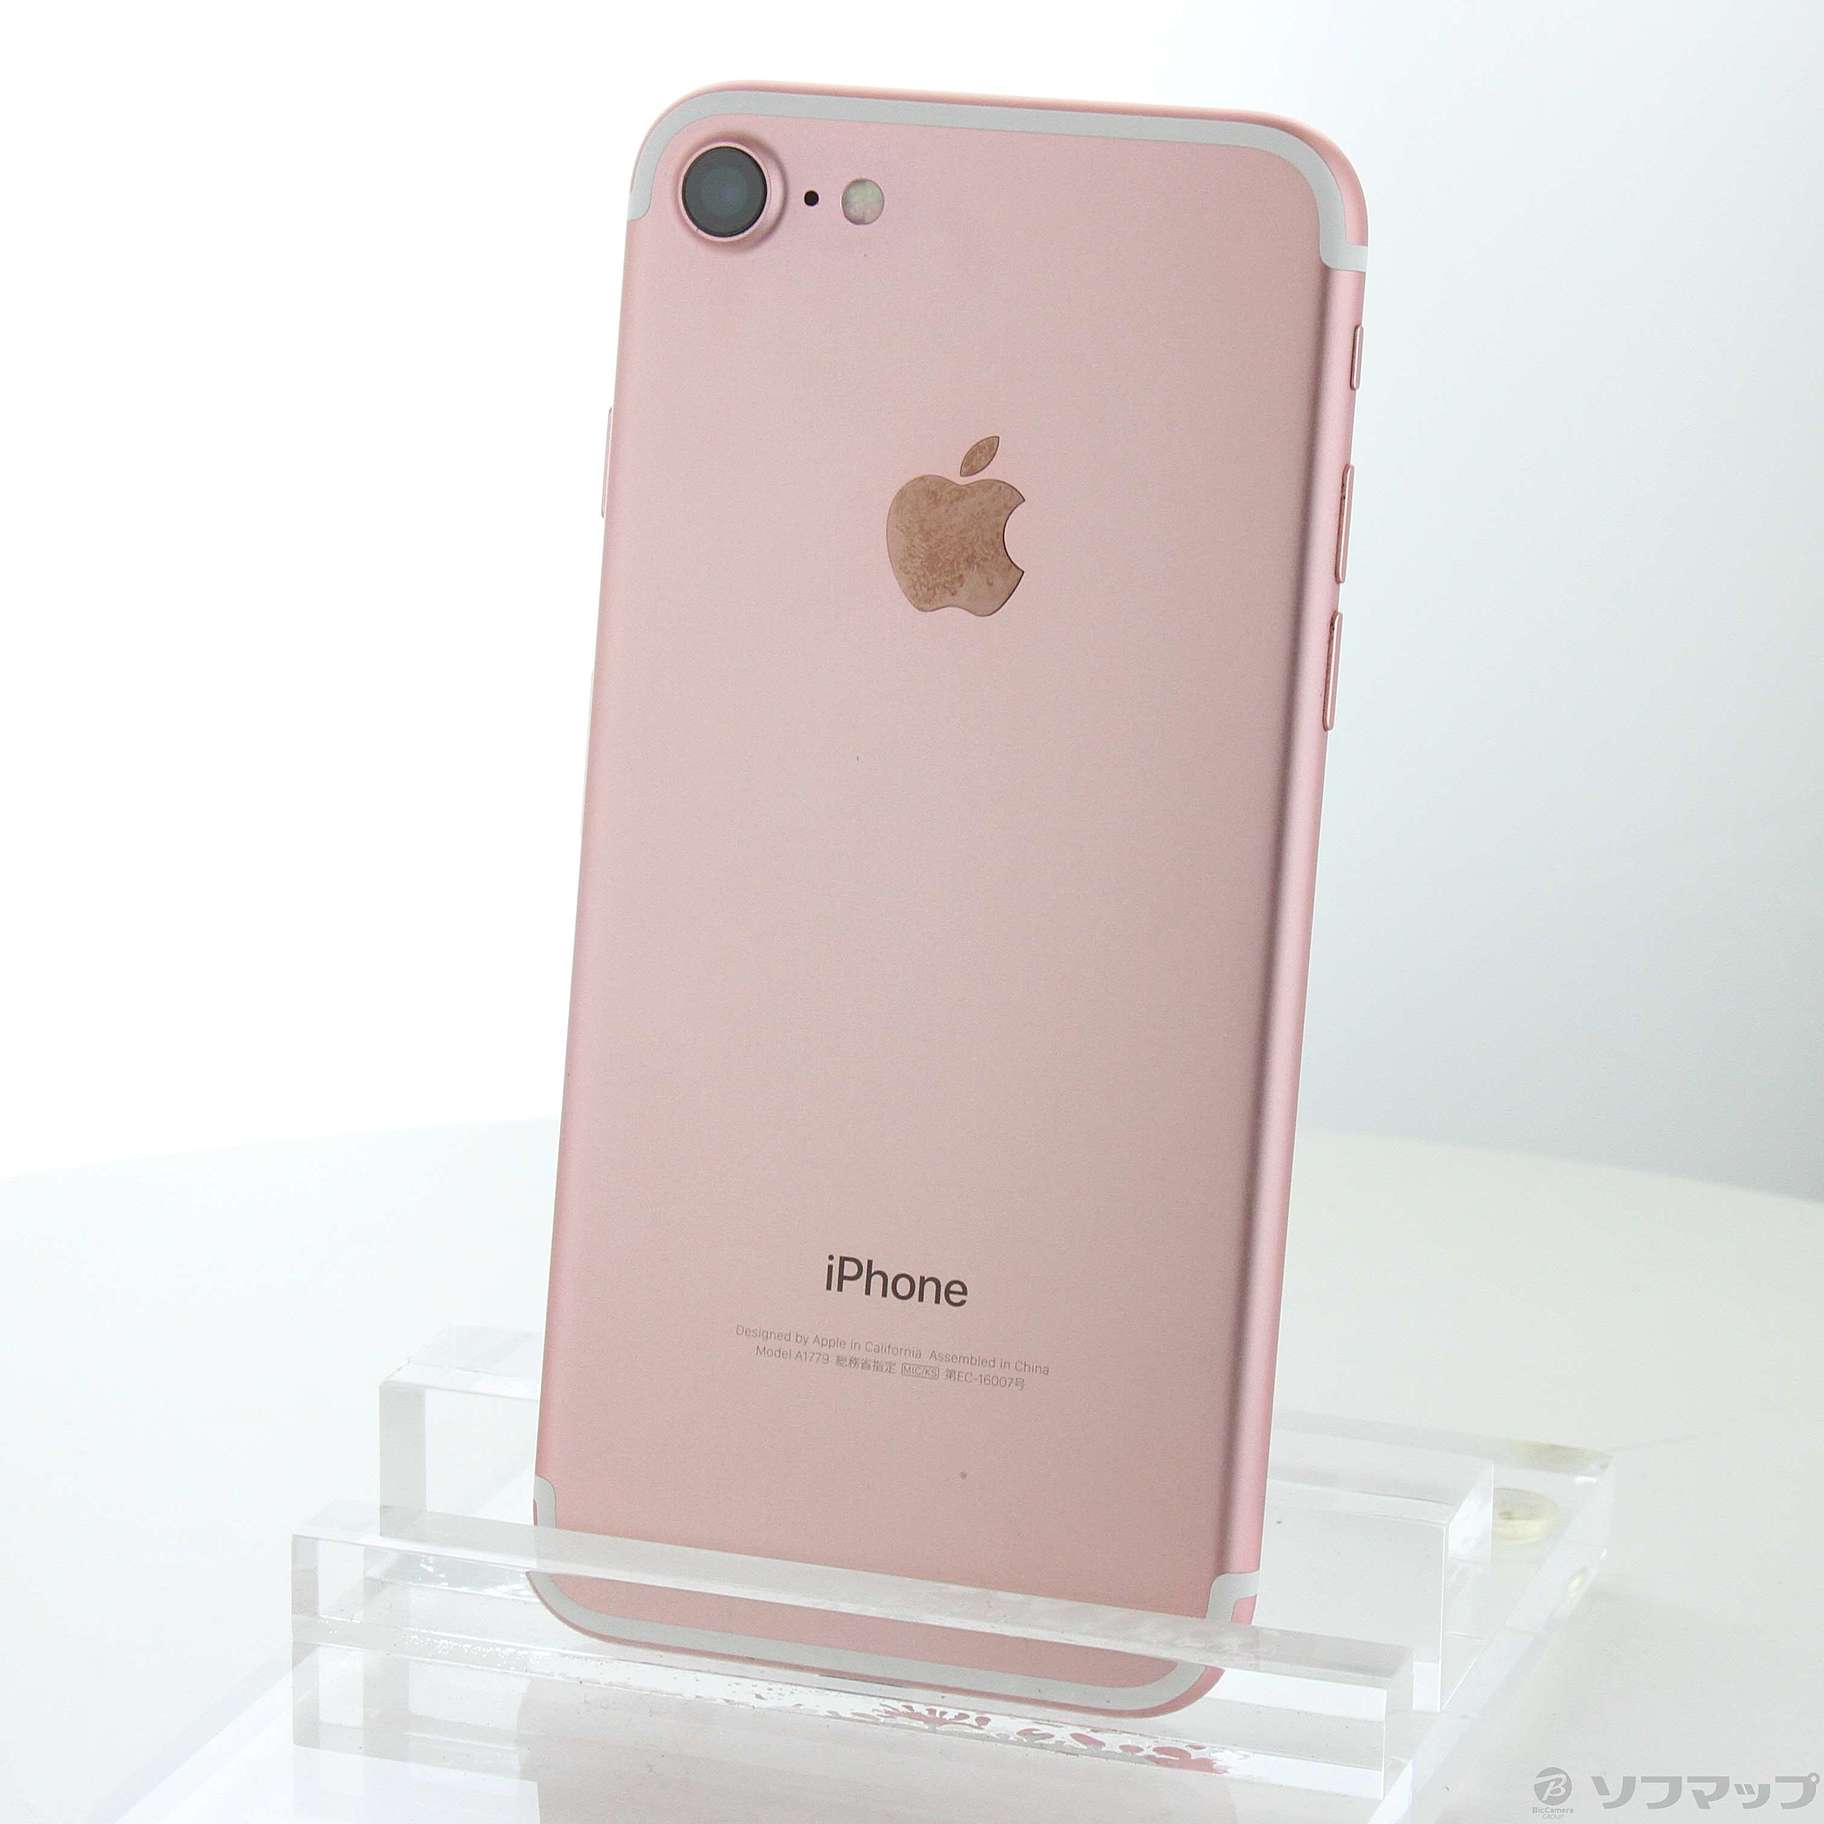 定番大人気iPhone7 A1779 MNCG2J/A 32GB Apple 3台セット ゴールド iOS15.5 初期化済 判定〇 simロック解除済 最大容量100/100/100％ iPhone